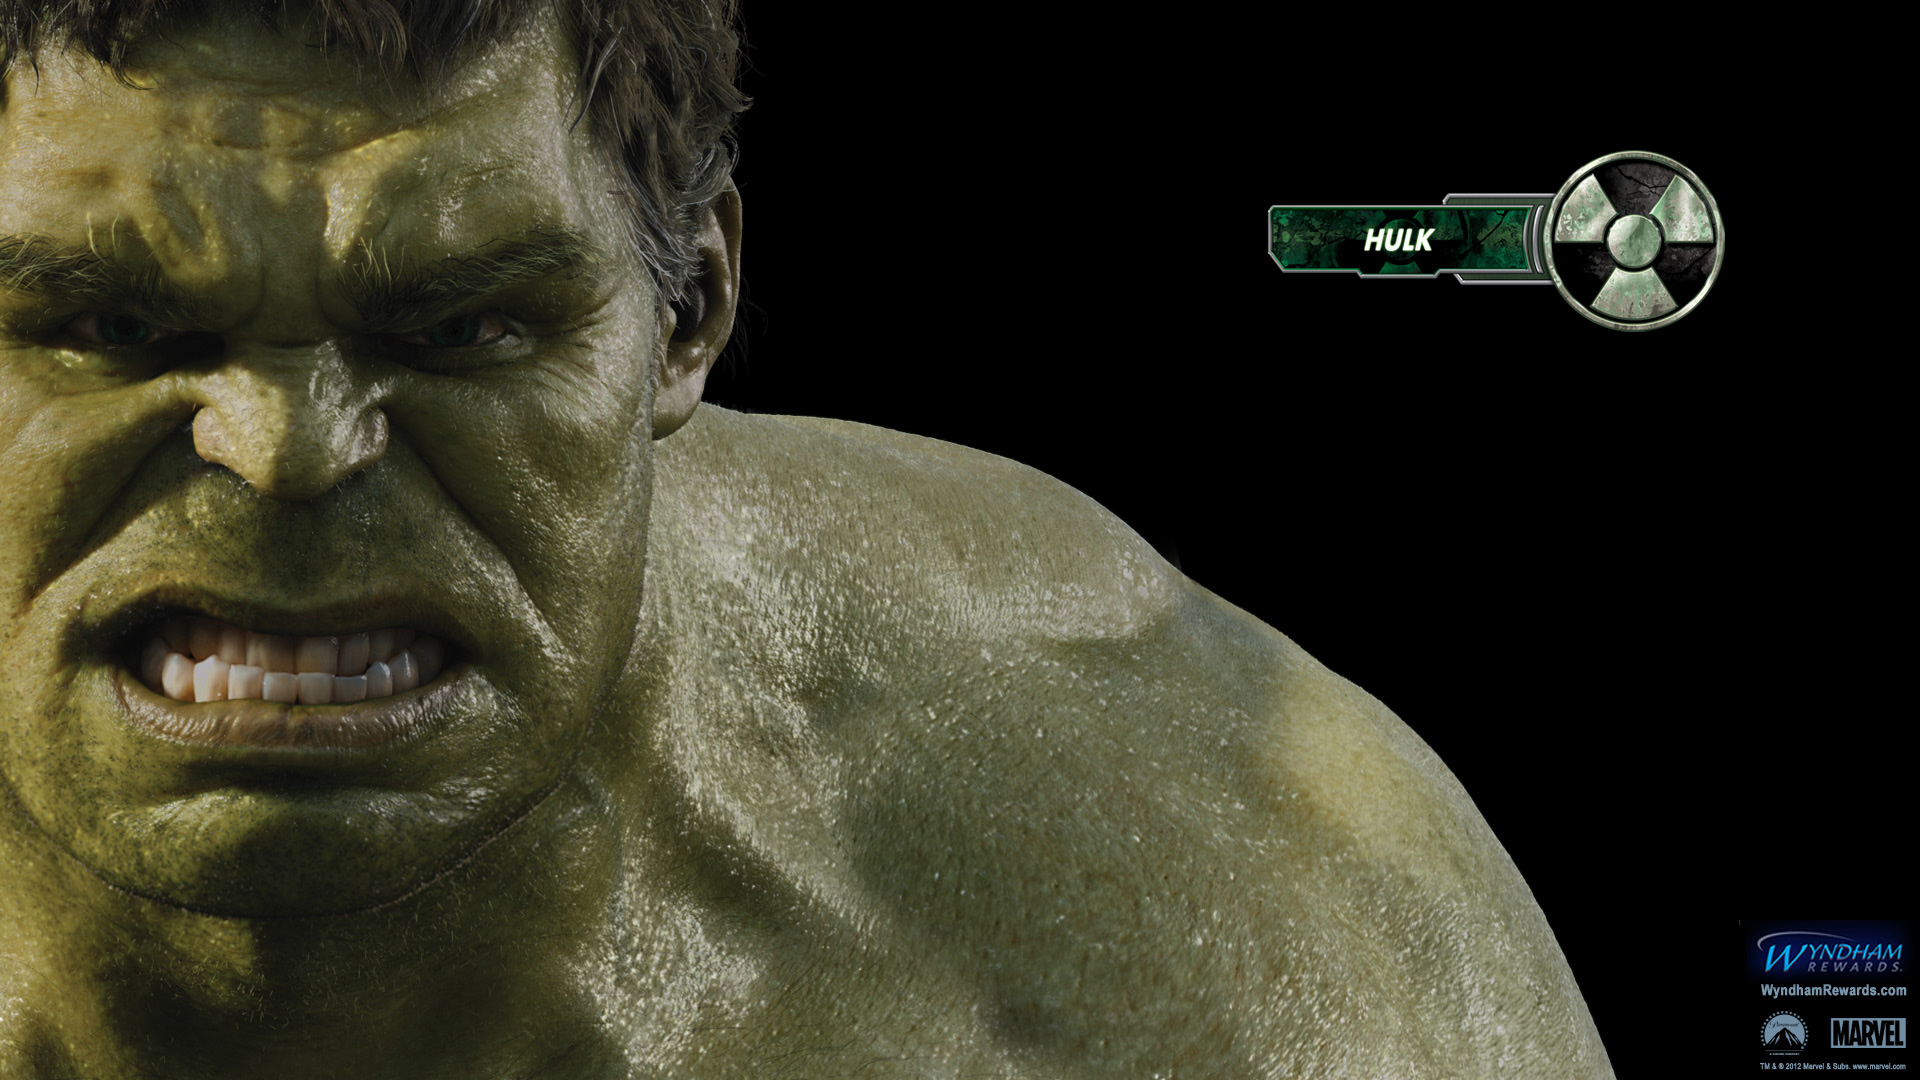 April The Incredible Hulk Engine Of Destruction